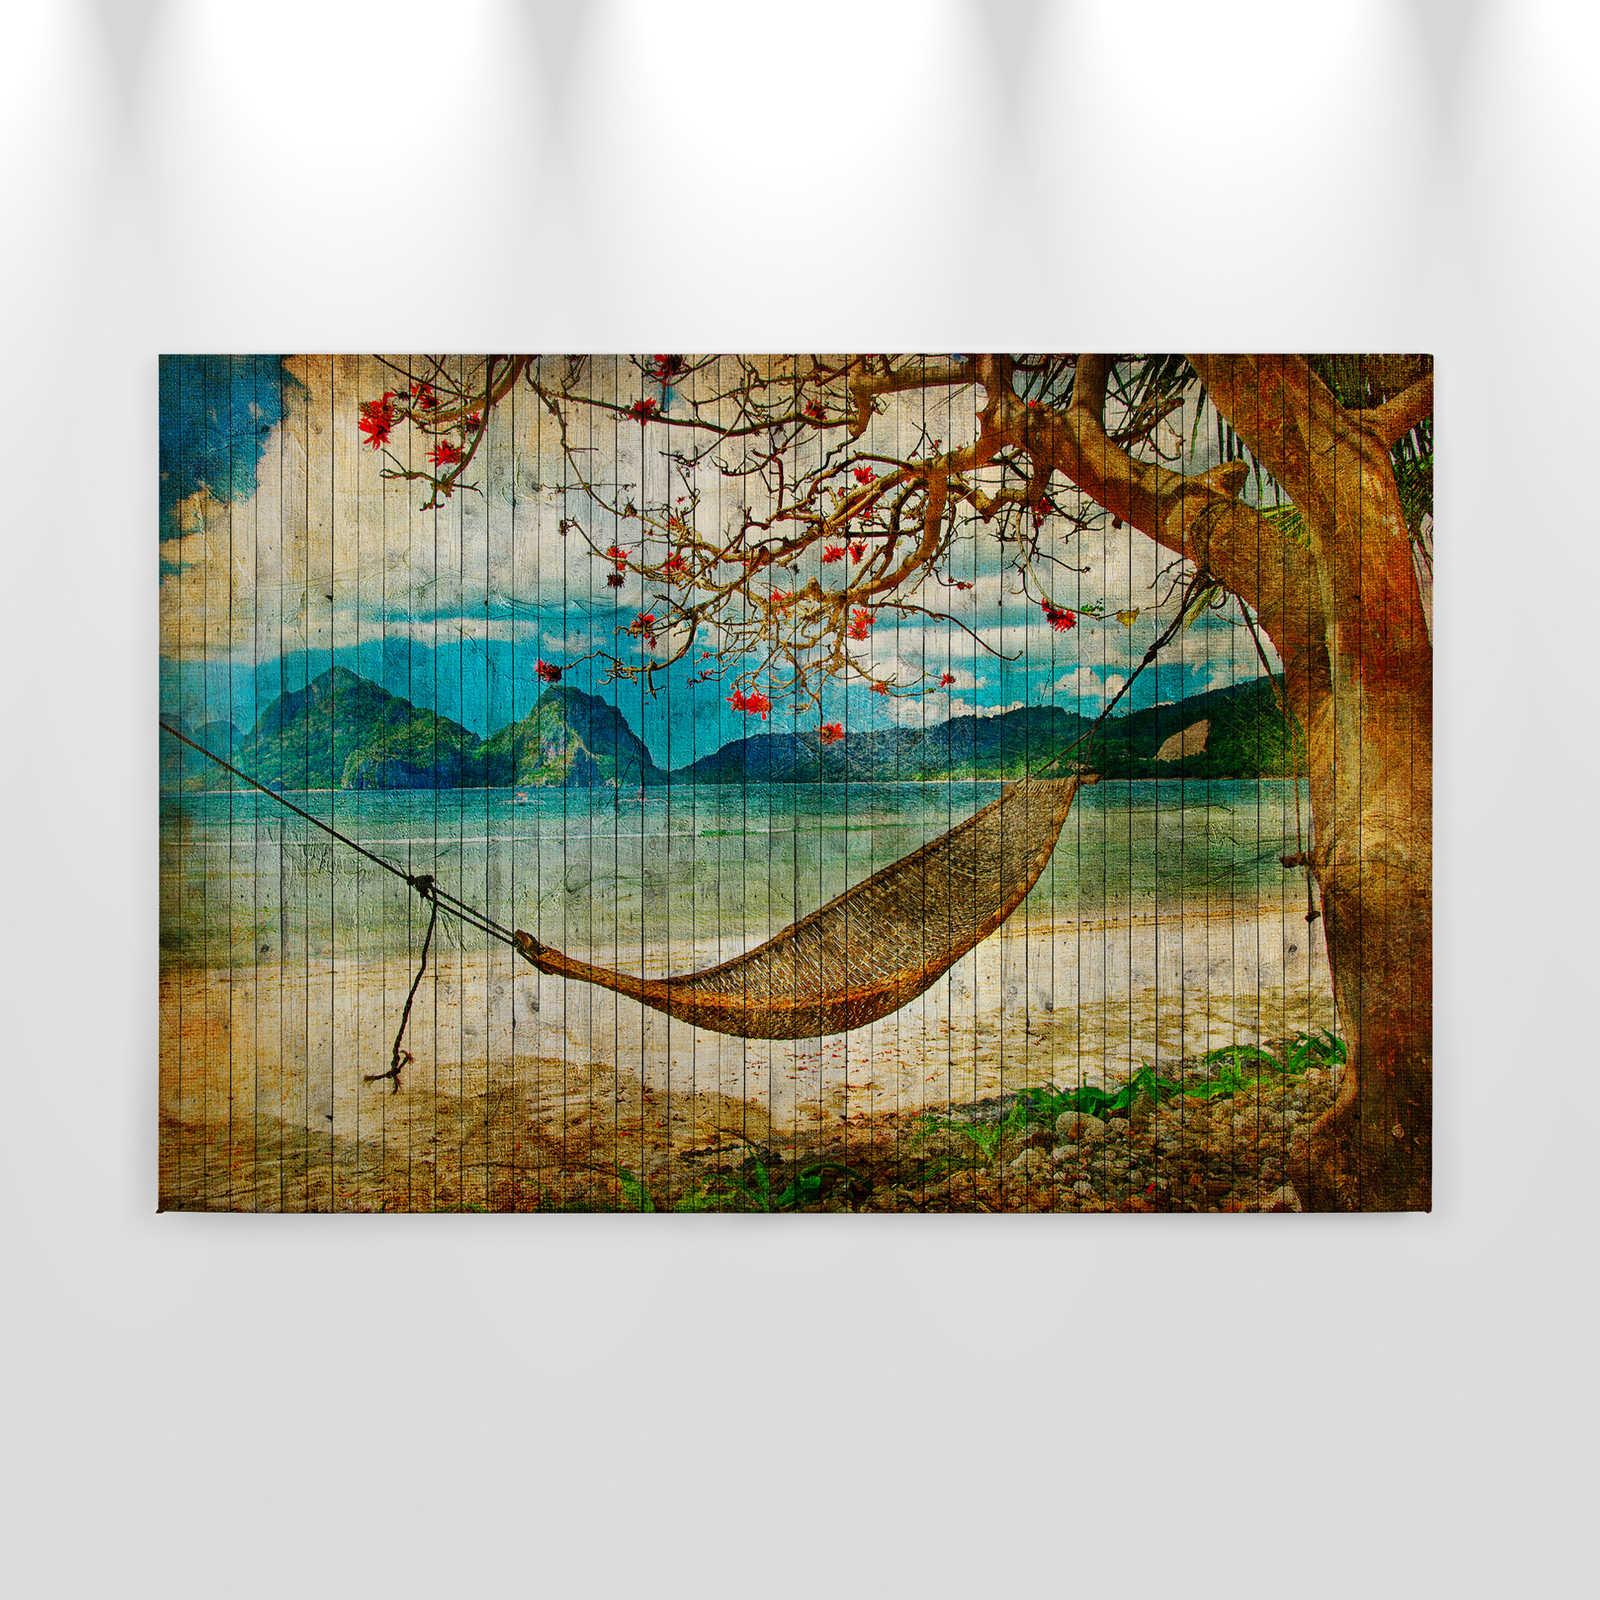             Tahiti 2 - Canvas painting in wood panel optic with hammock & South Seas beach - 0,90 m x 0,60 m
        